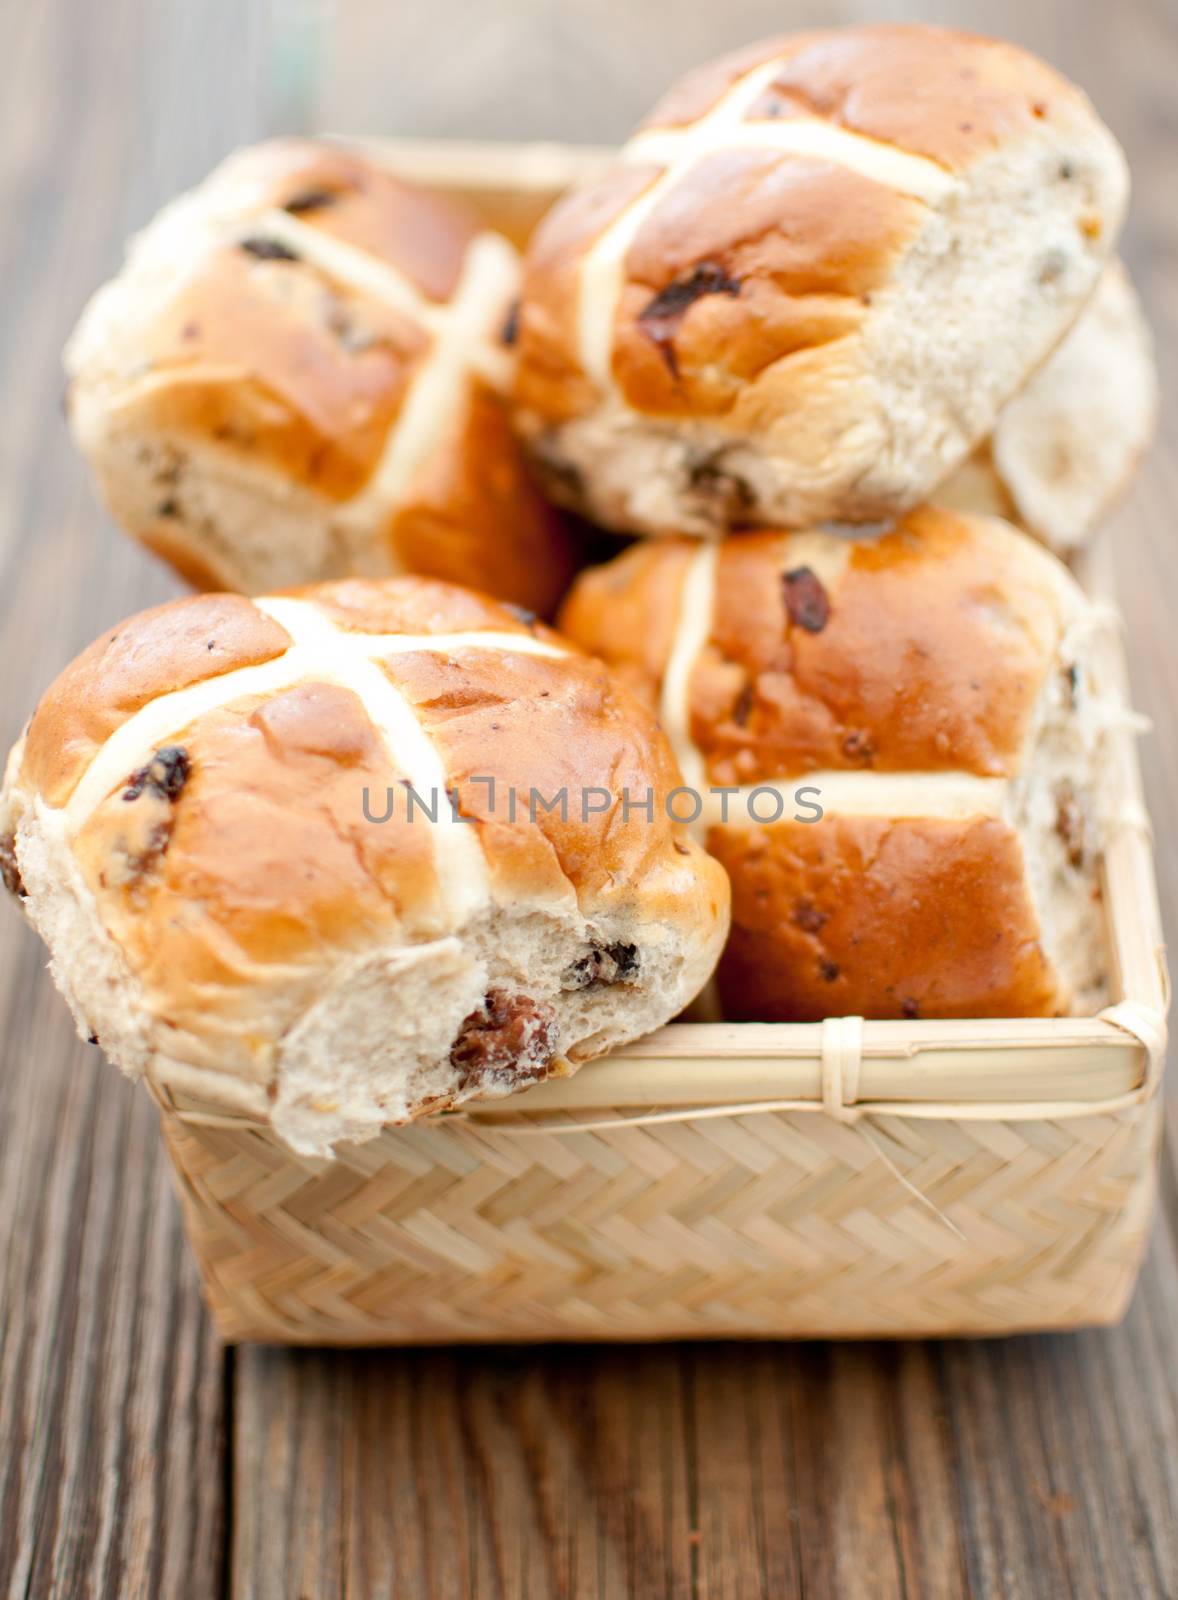 Hot cross buns by unikpix